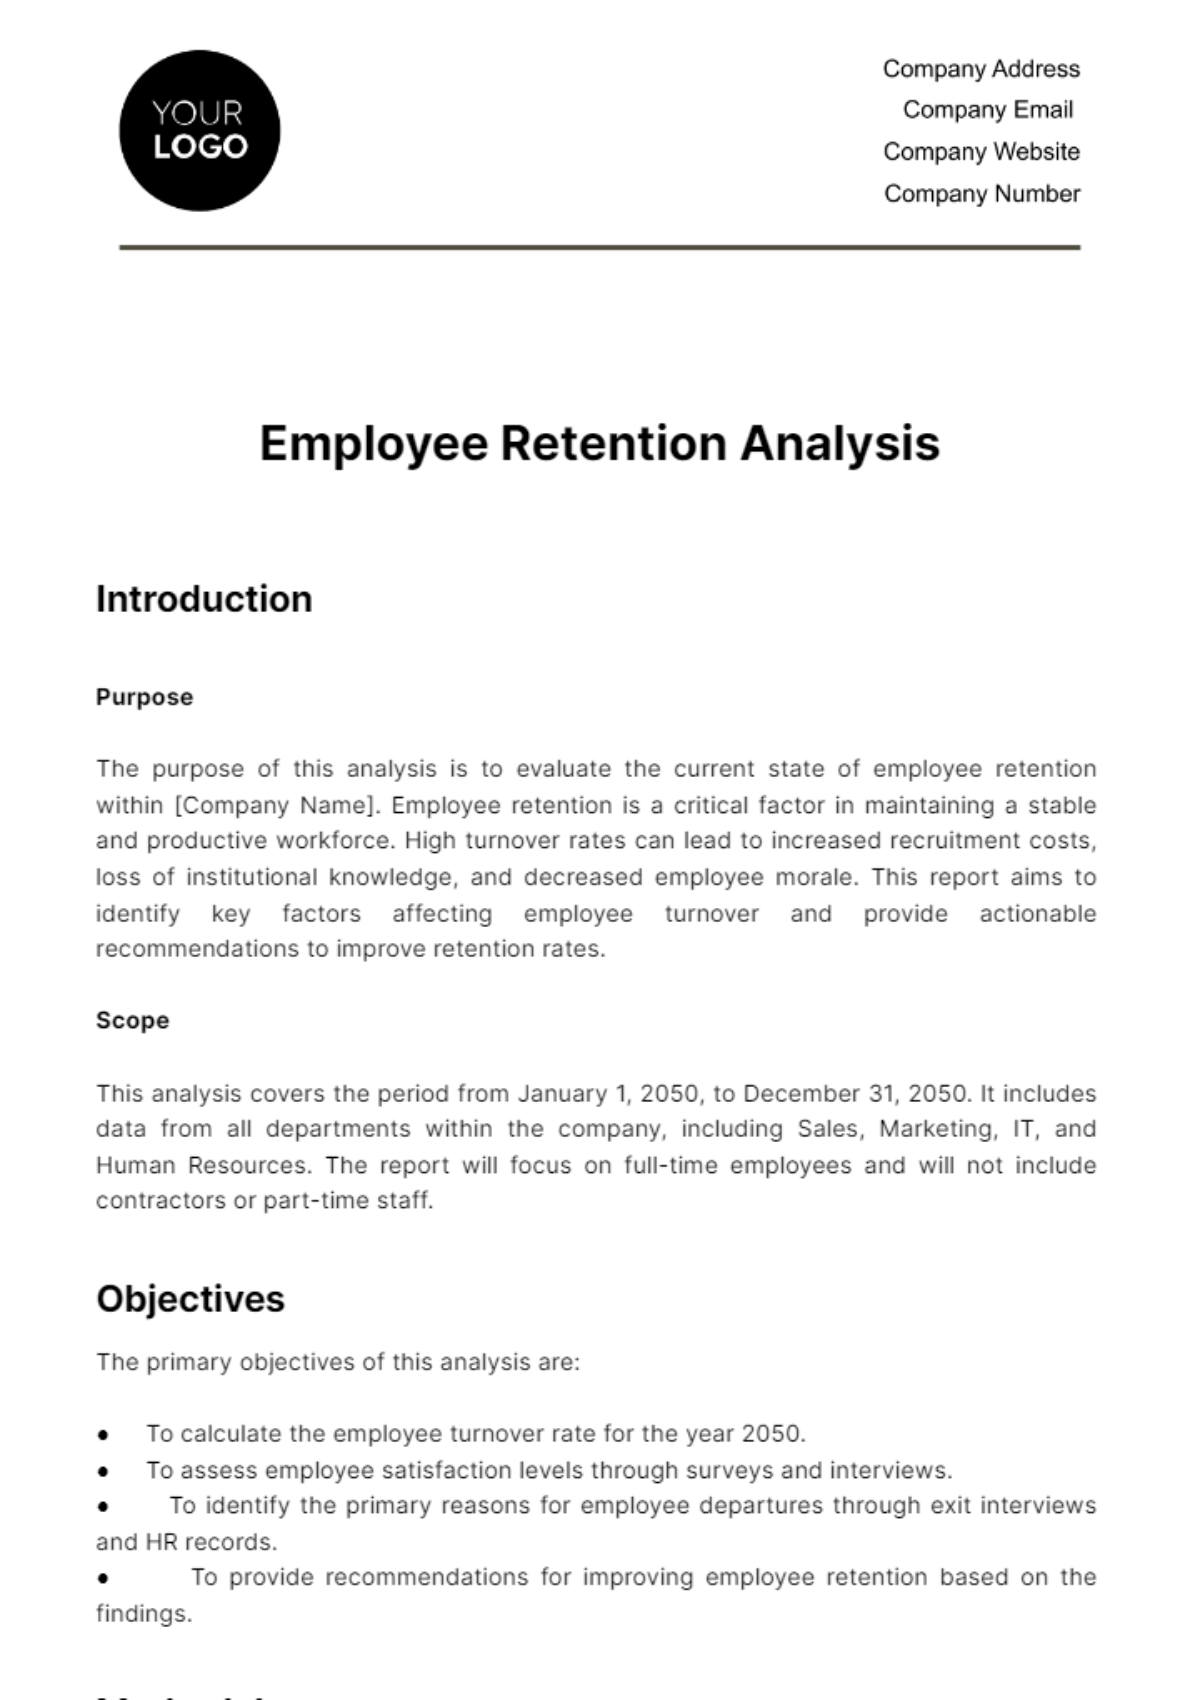 Free Employee Retention Analysis HR Template